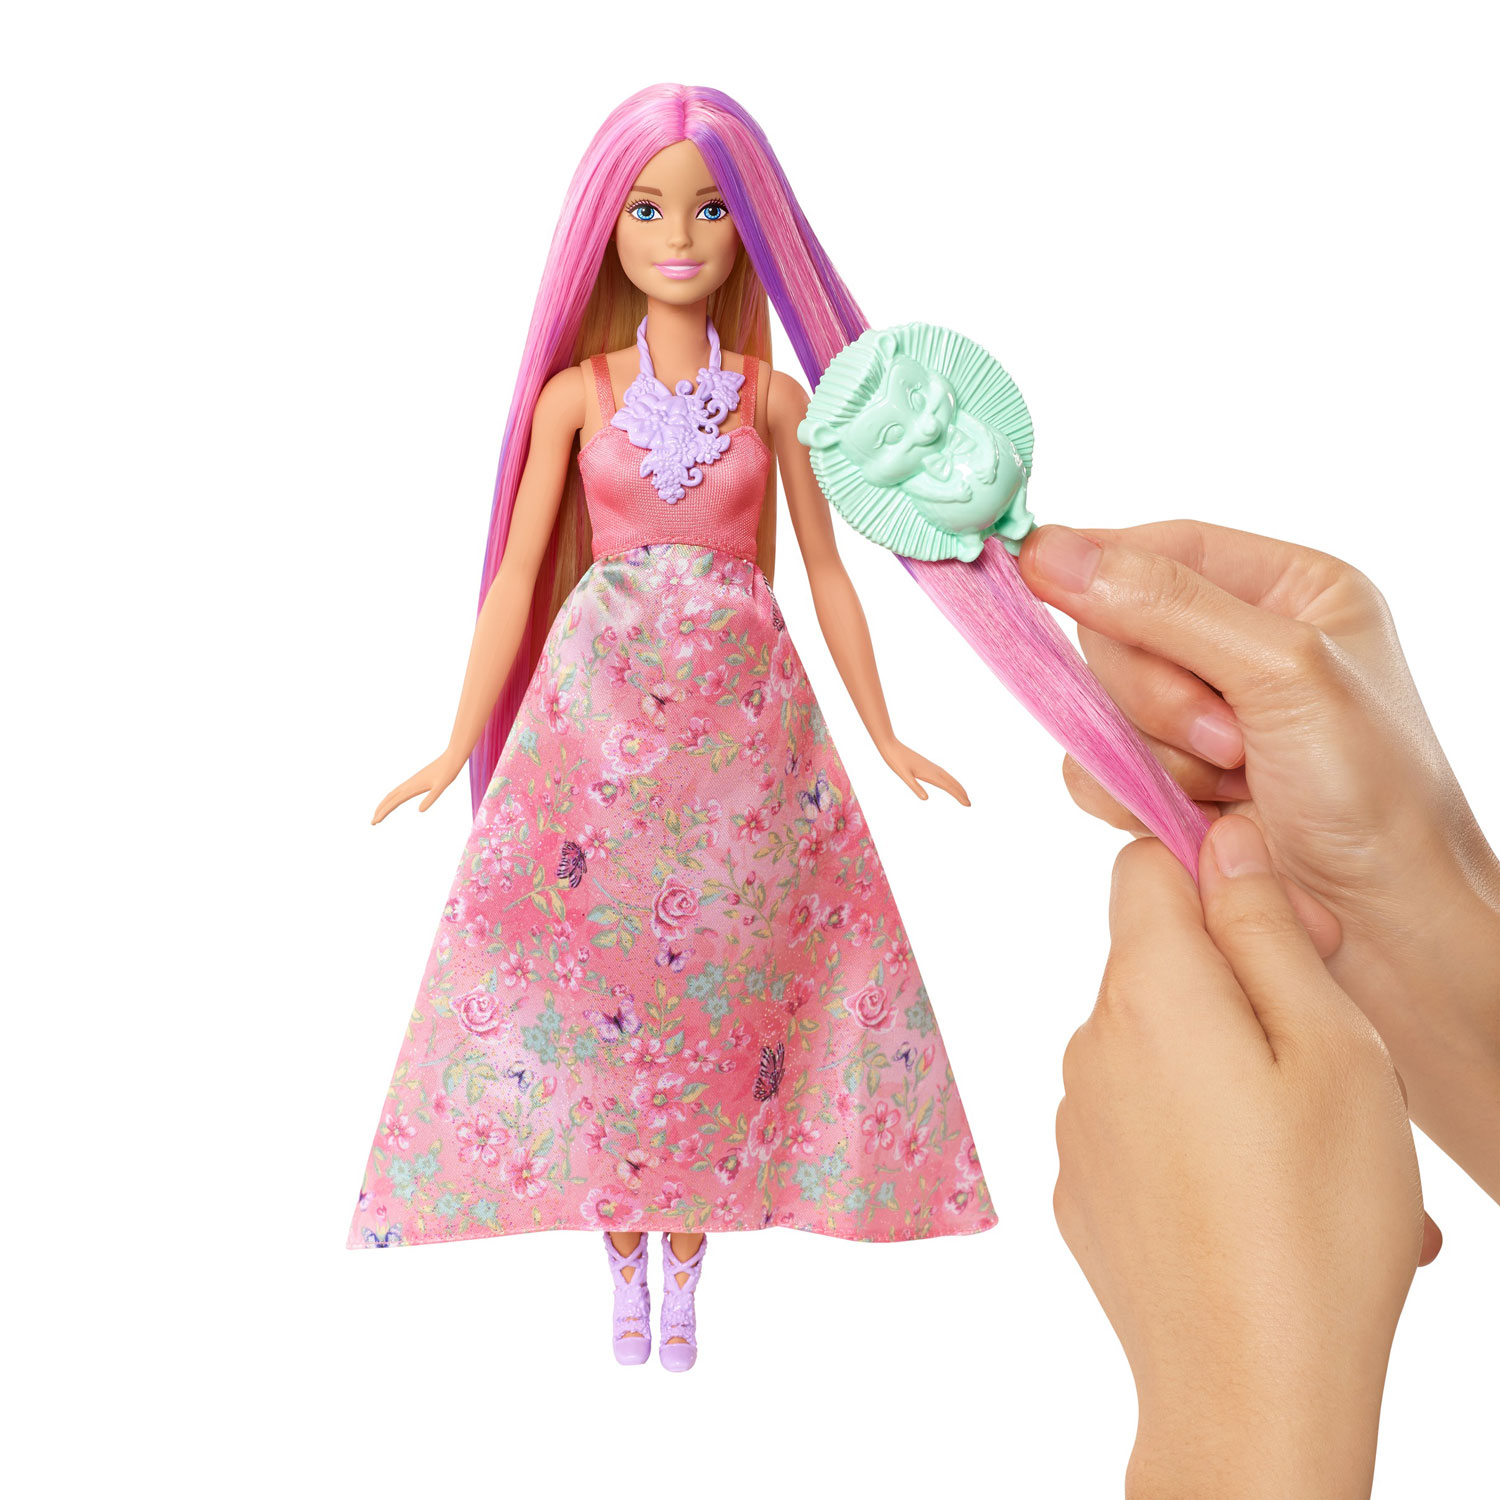 Barbie Dreamtopia  Color Stylin' Prinses - Blond